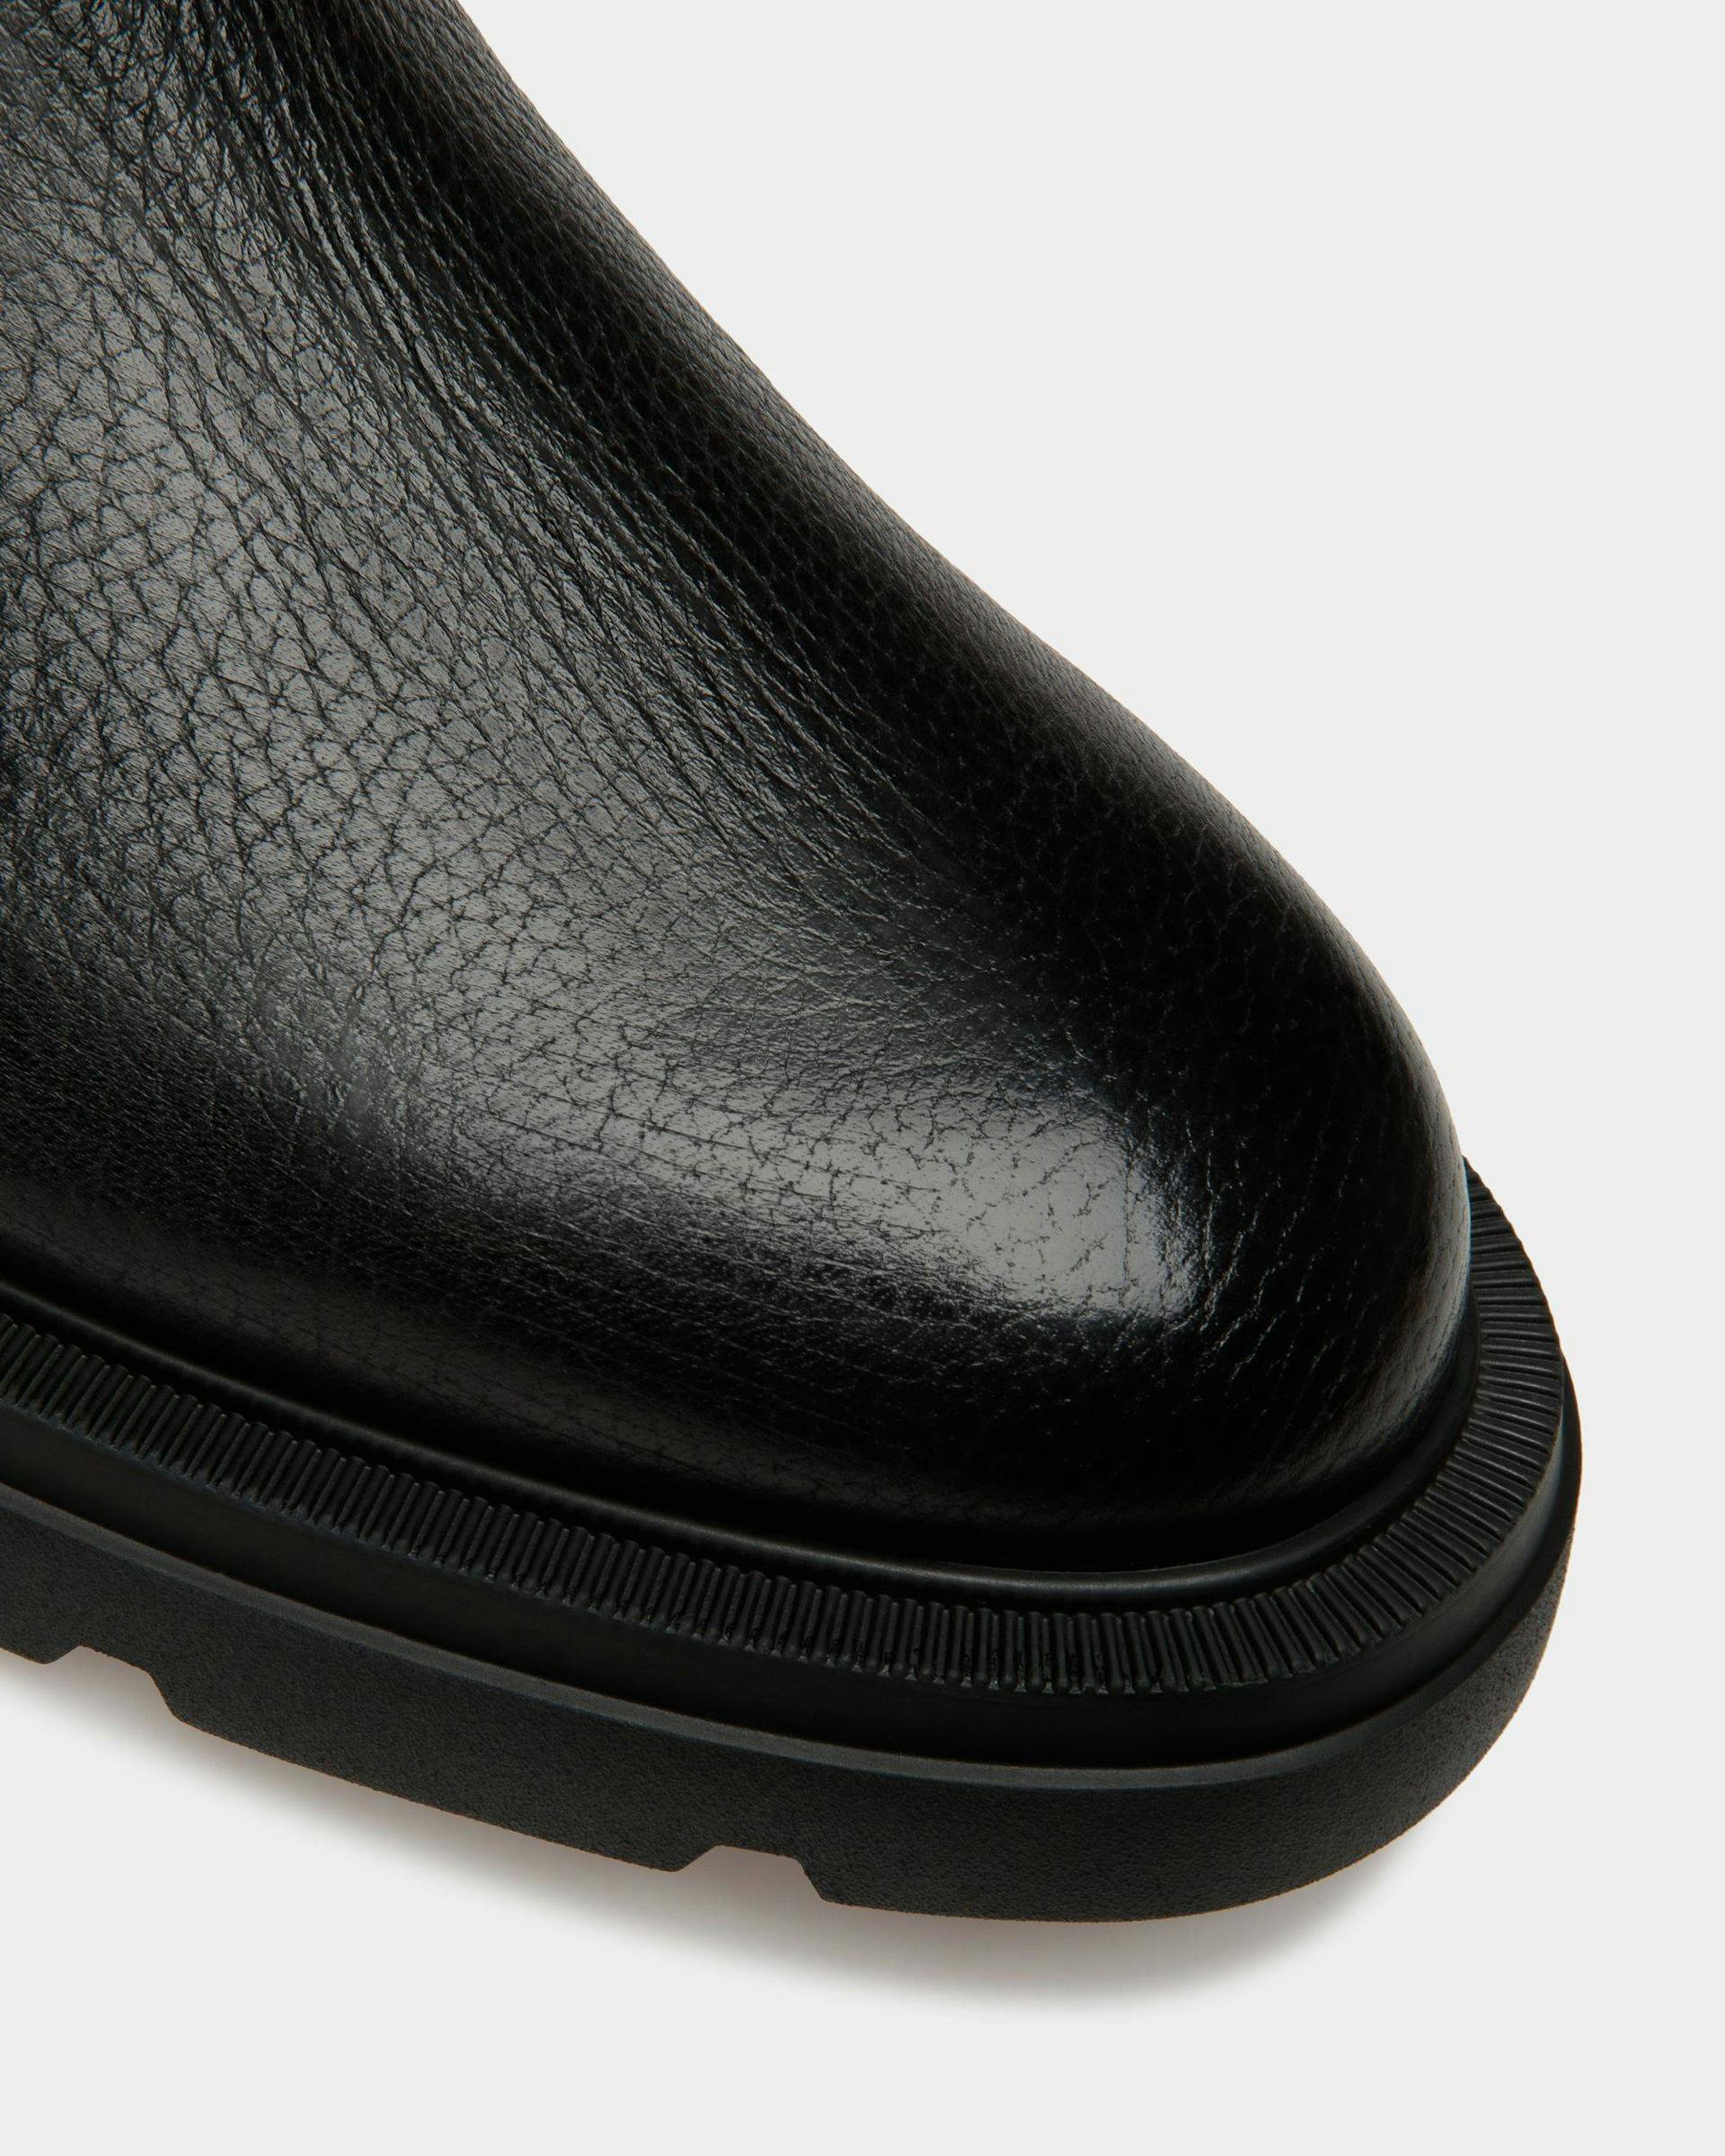 Zurich Booties In Black Leather - Men's - Bally - 05